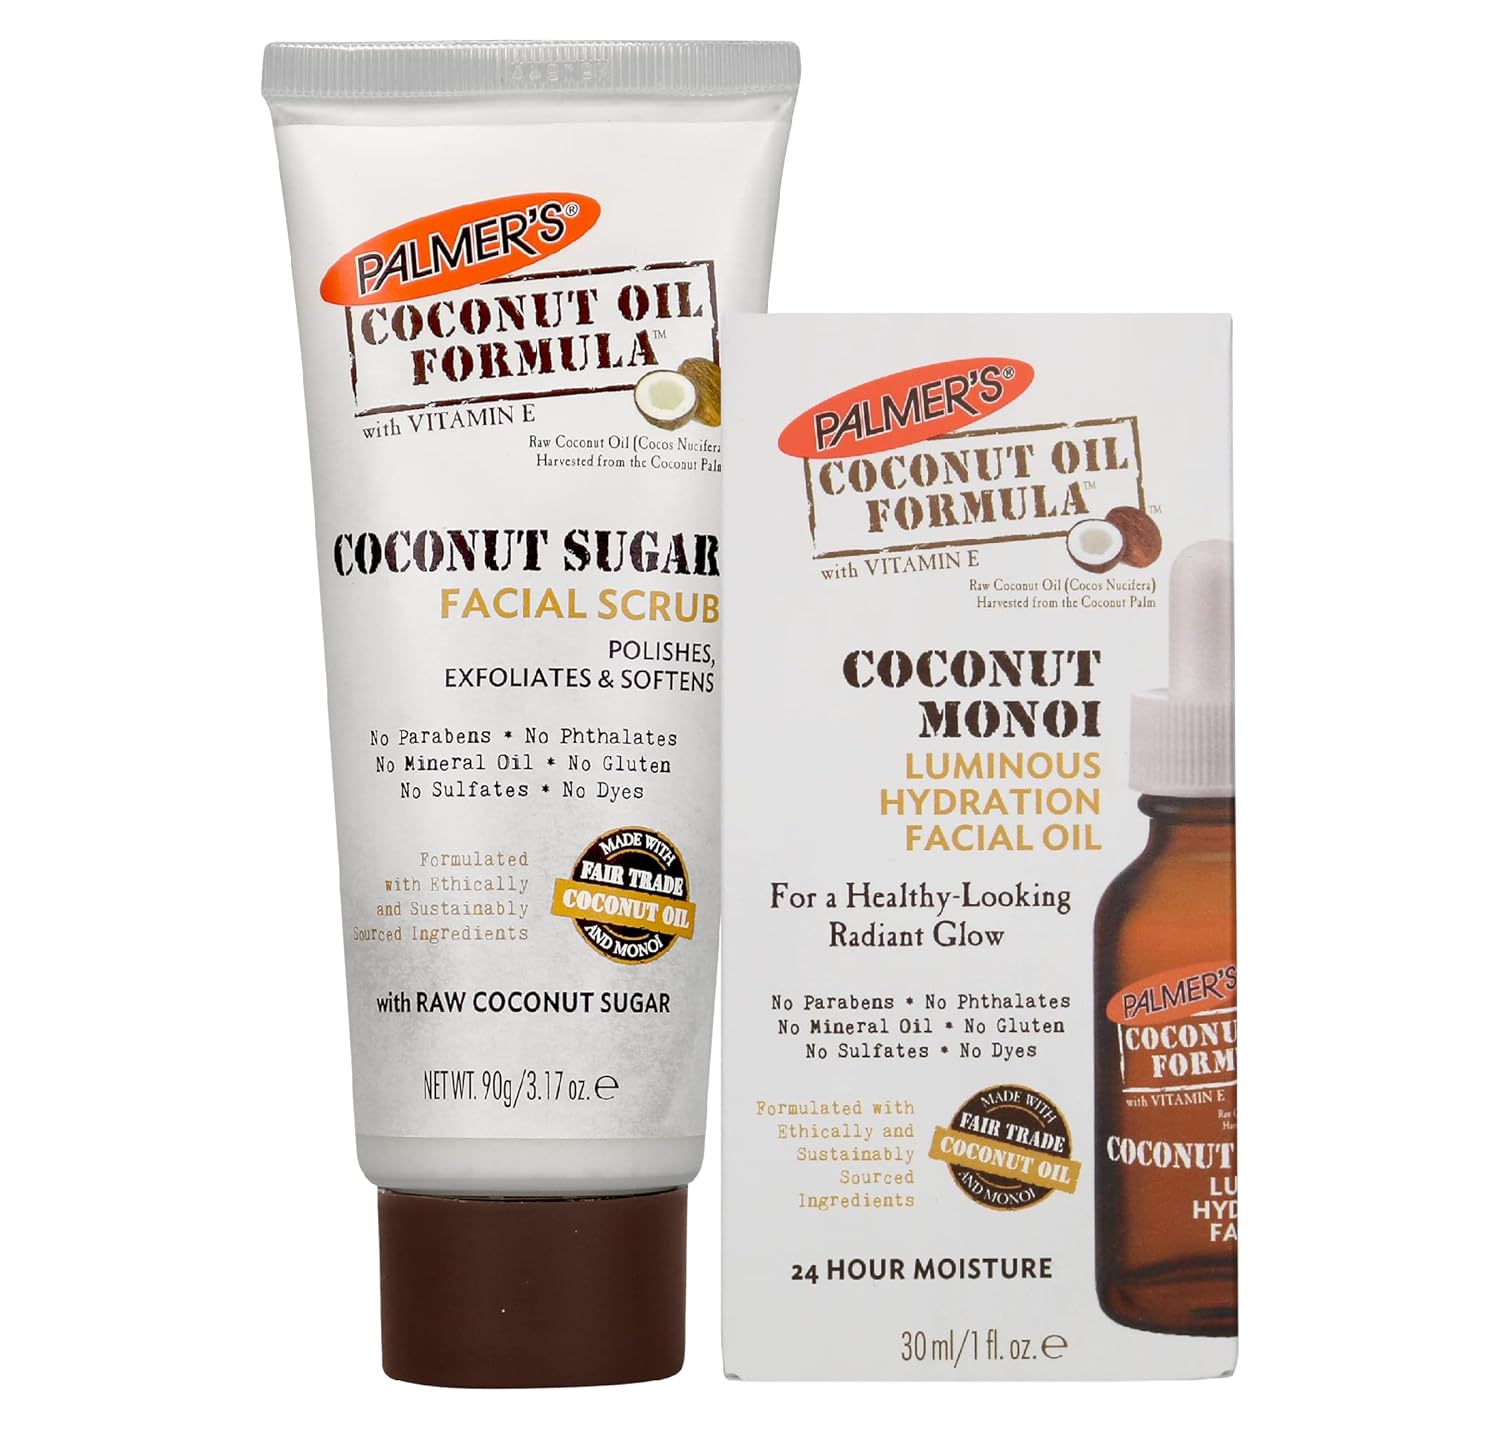 Palmer's Face Oil + Face Scrub, Coconut Oil Formula with Vitamin E Skin Care Bundle, Made with Fair Trade Coconut Oil & Monoi, Includes 1 Facial Oil (1 fl oz) and 1 Face Exfoliator (3.17 oz)